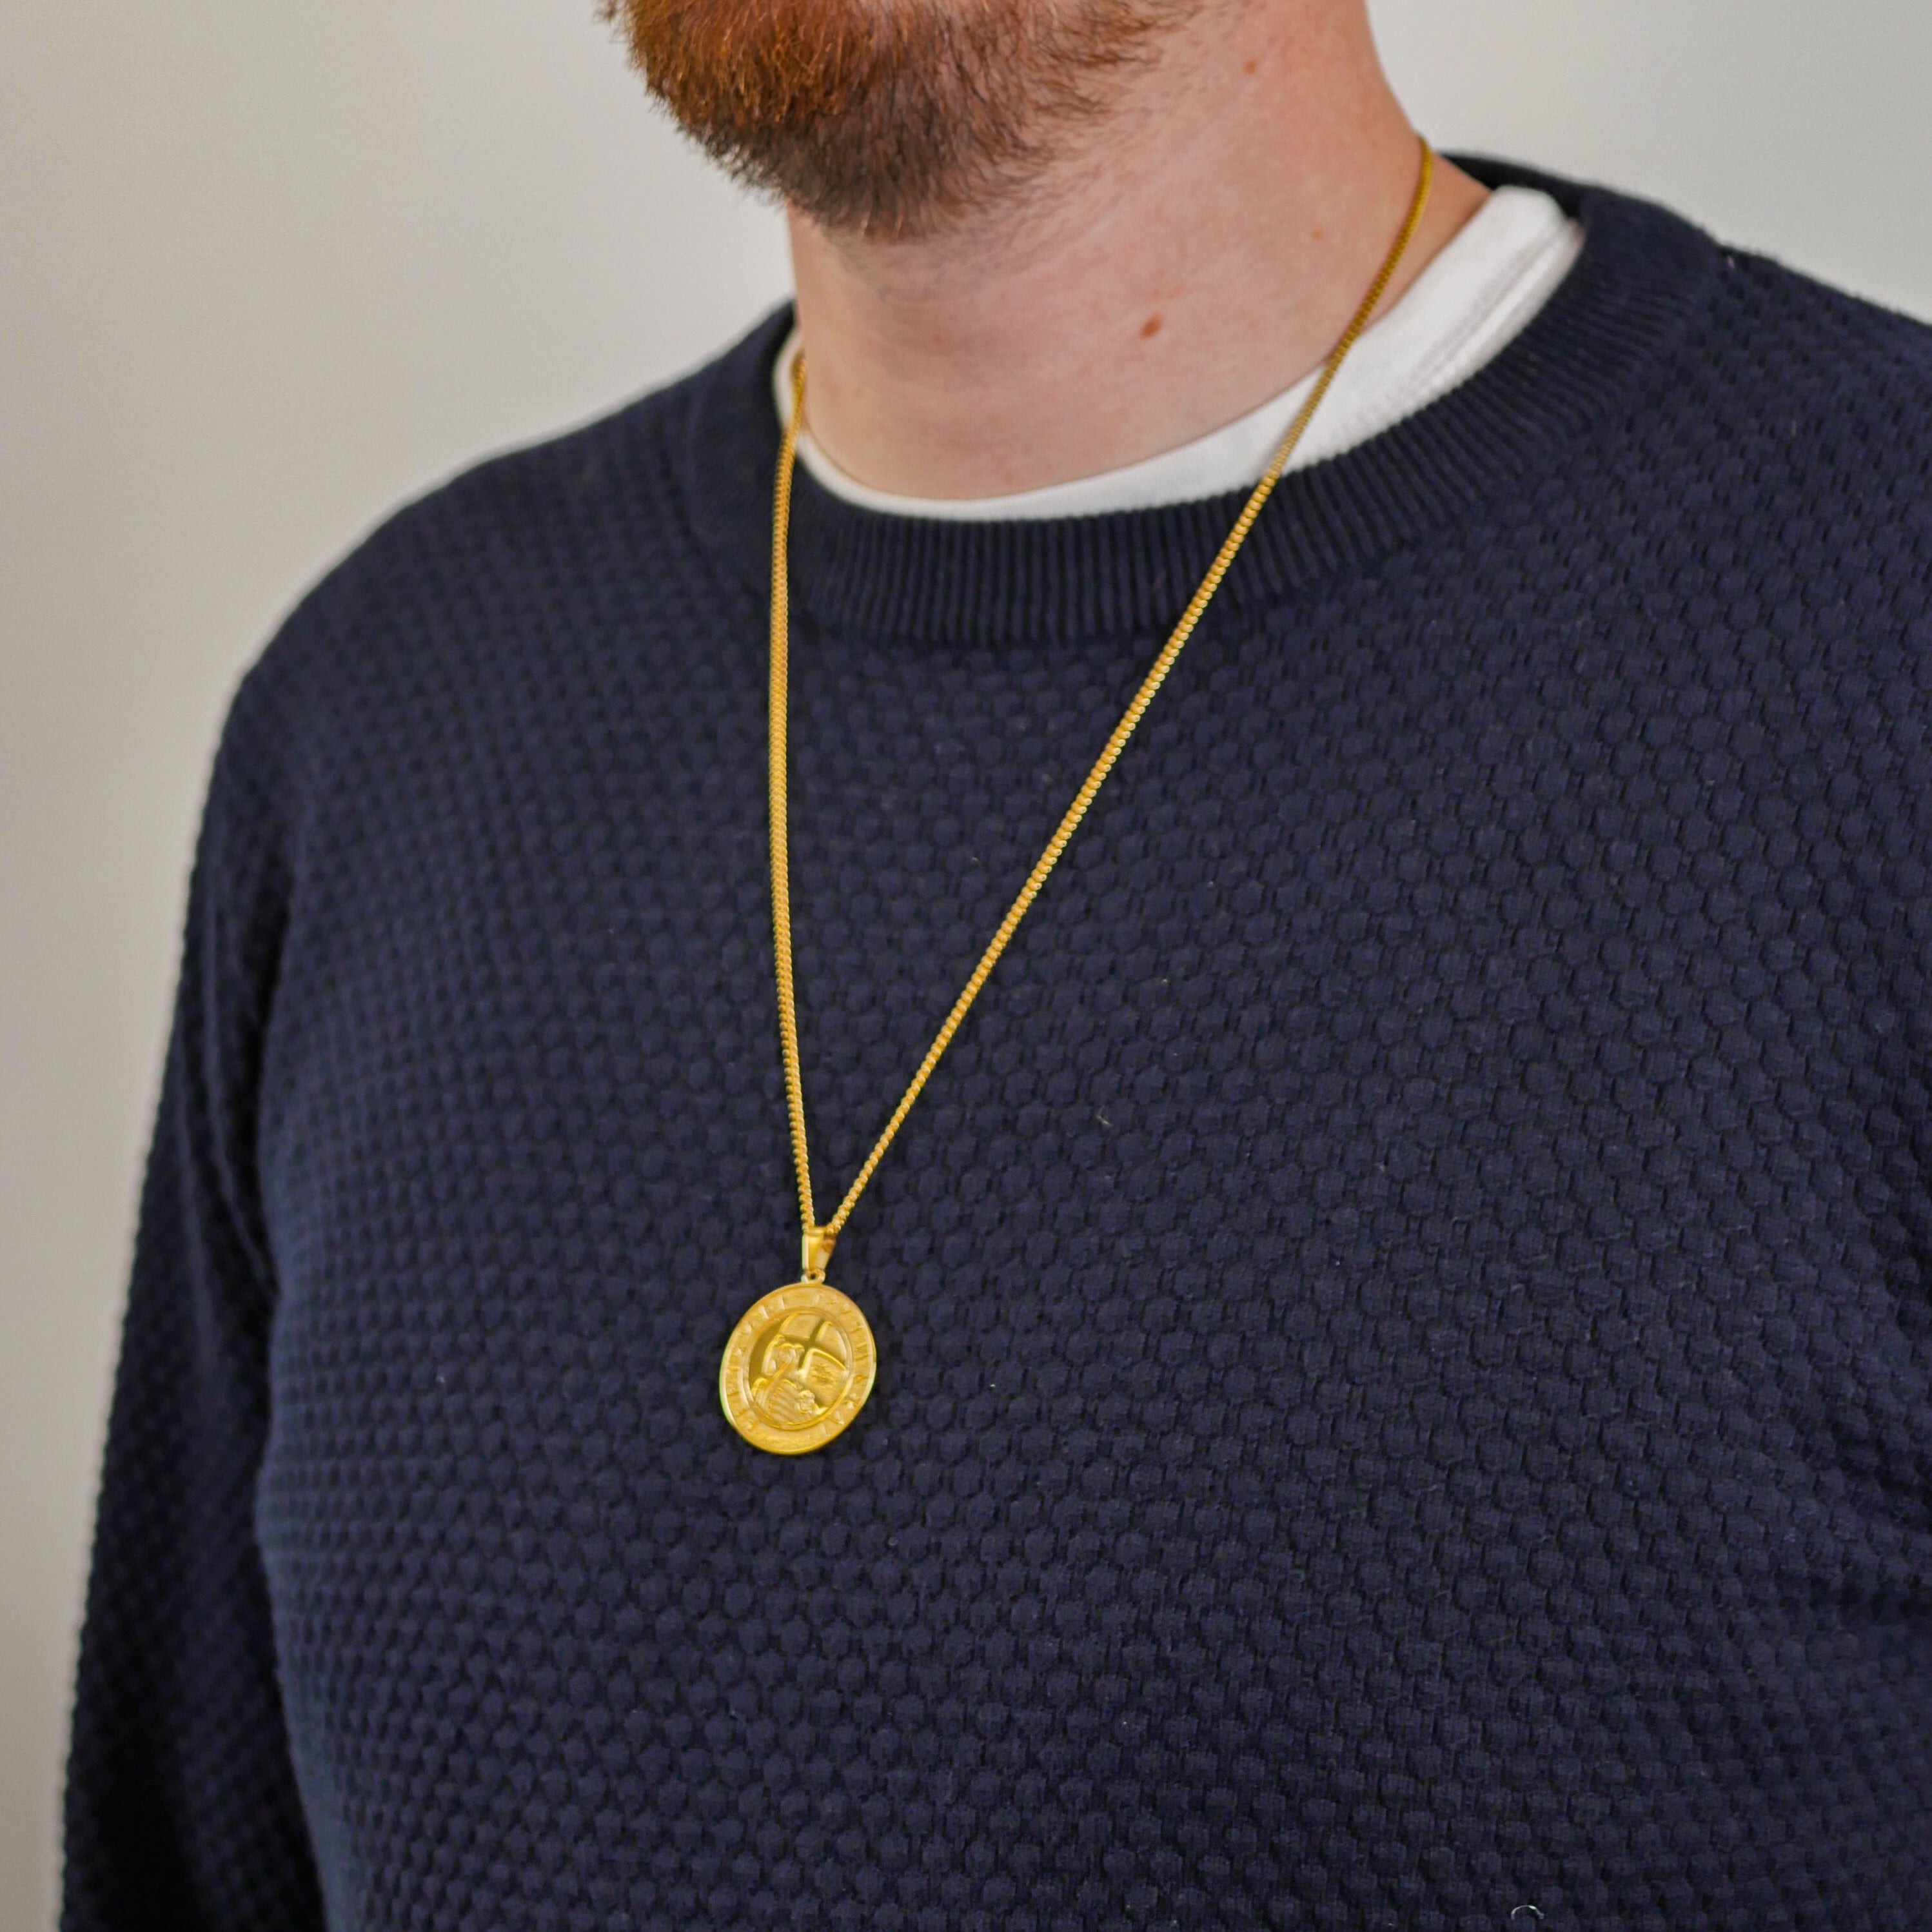 NL Explorer necklace - Gold-toned